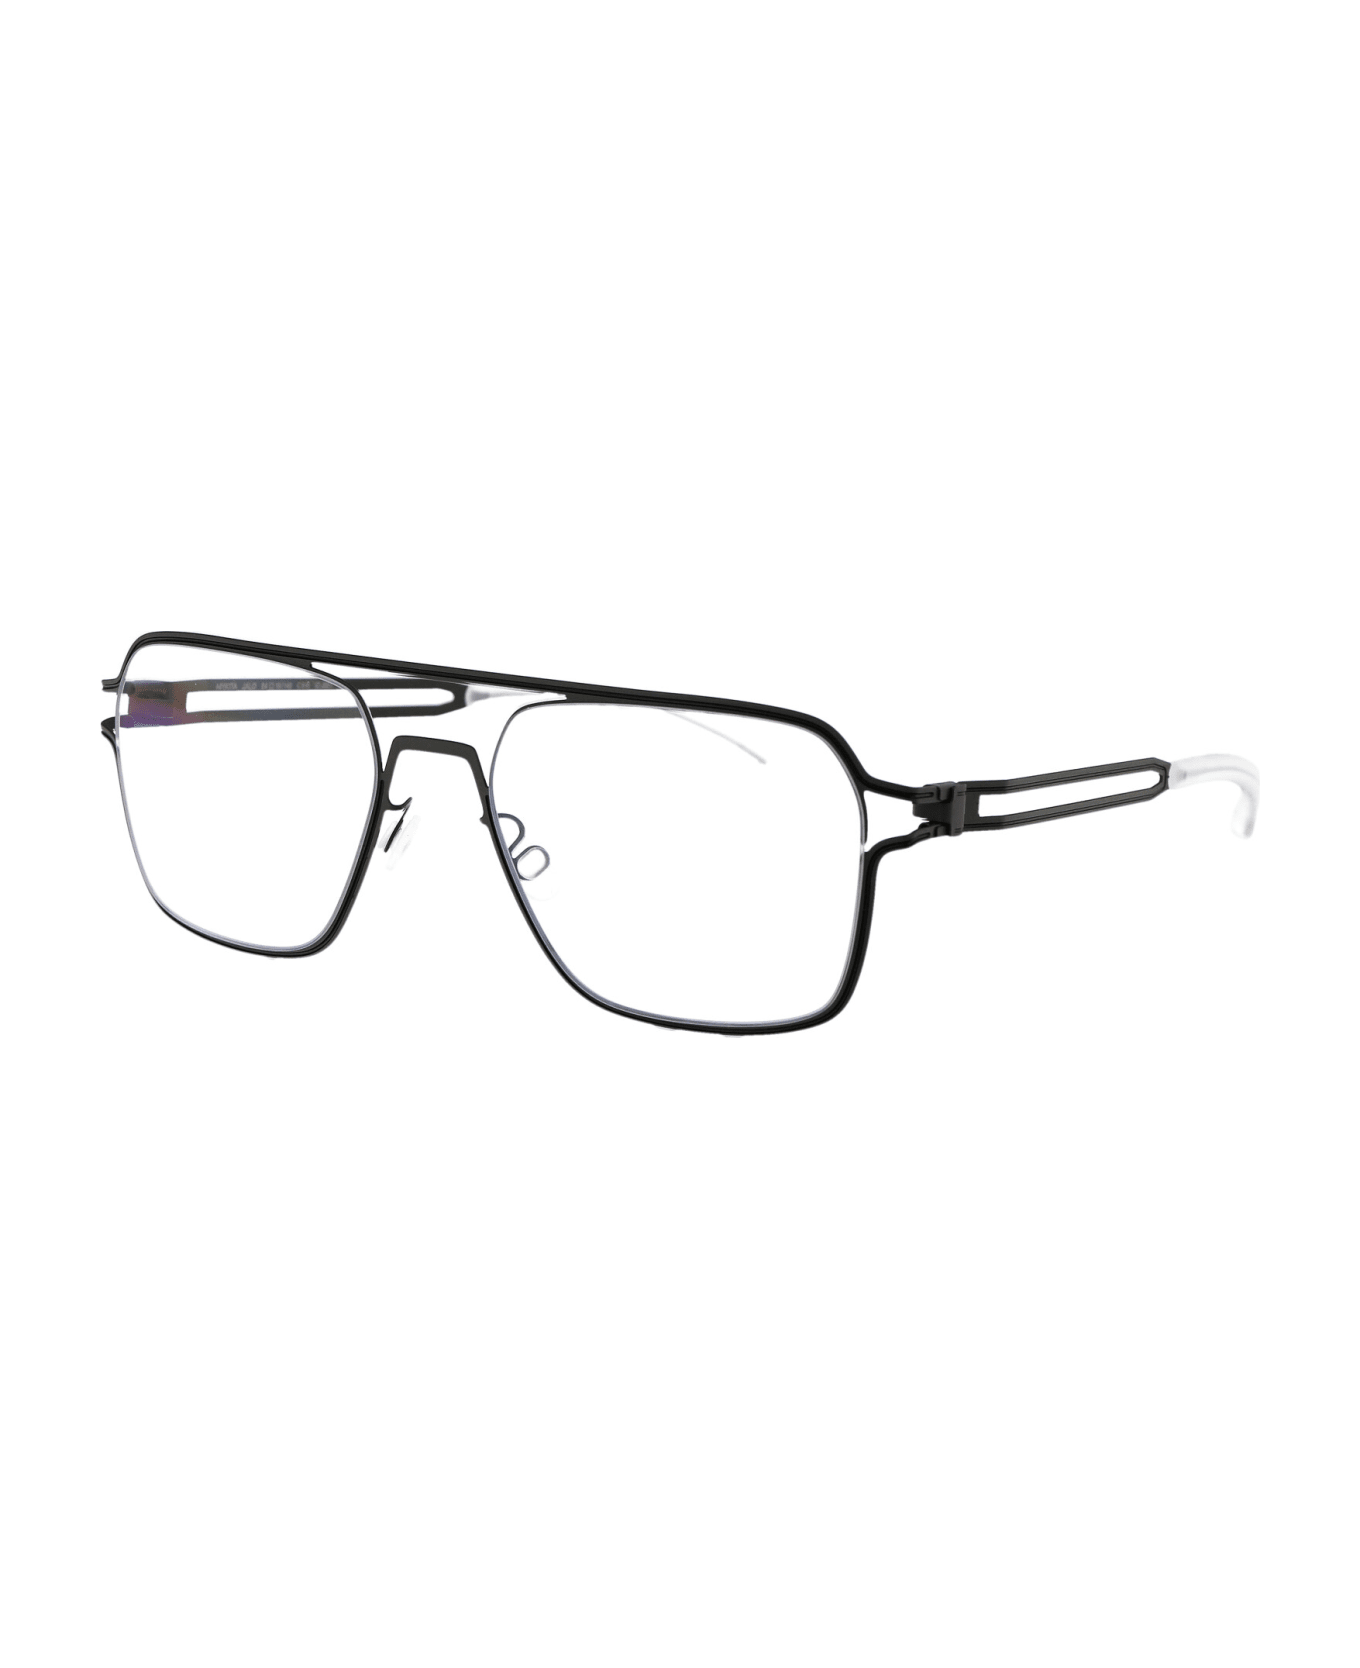 Mykita Jalo Glasses - 515 Storm Grey/Black Clear アイウェア